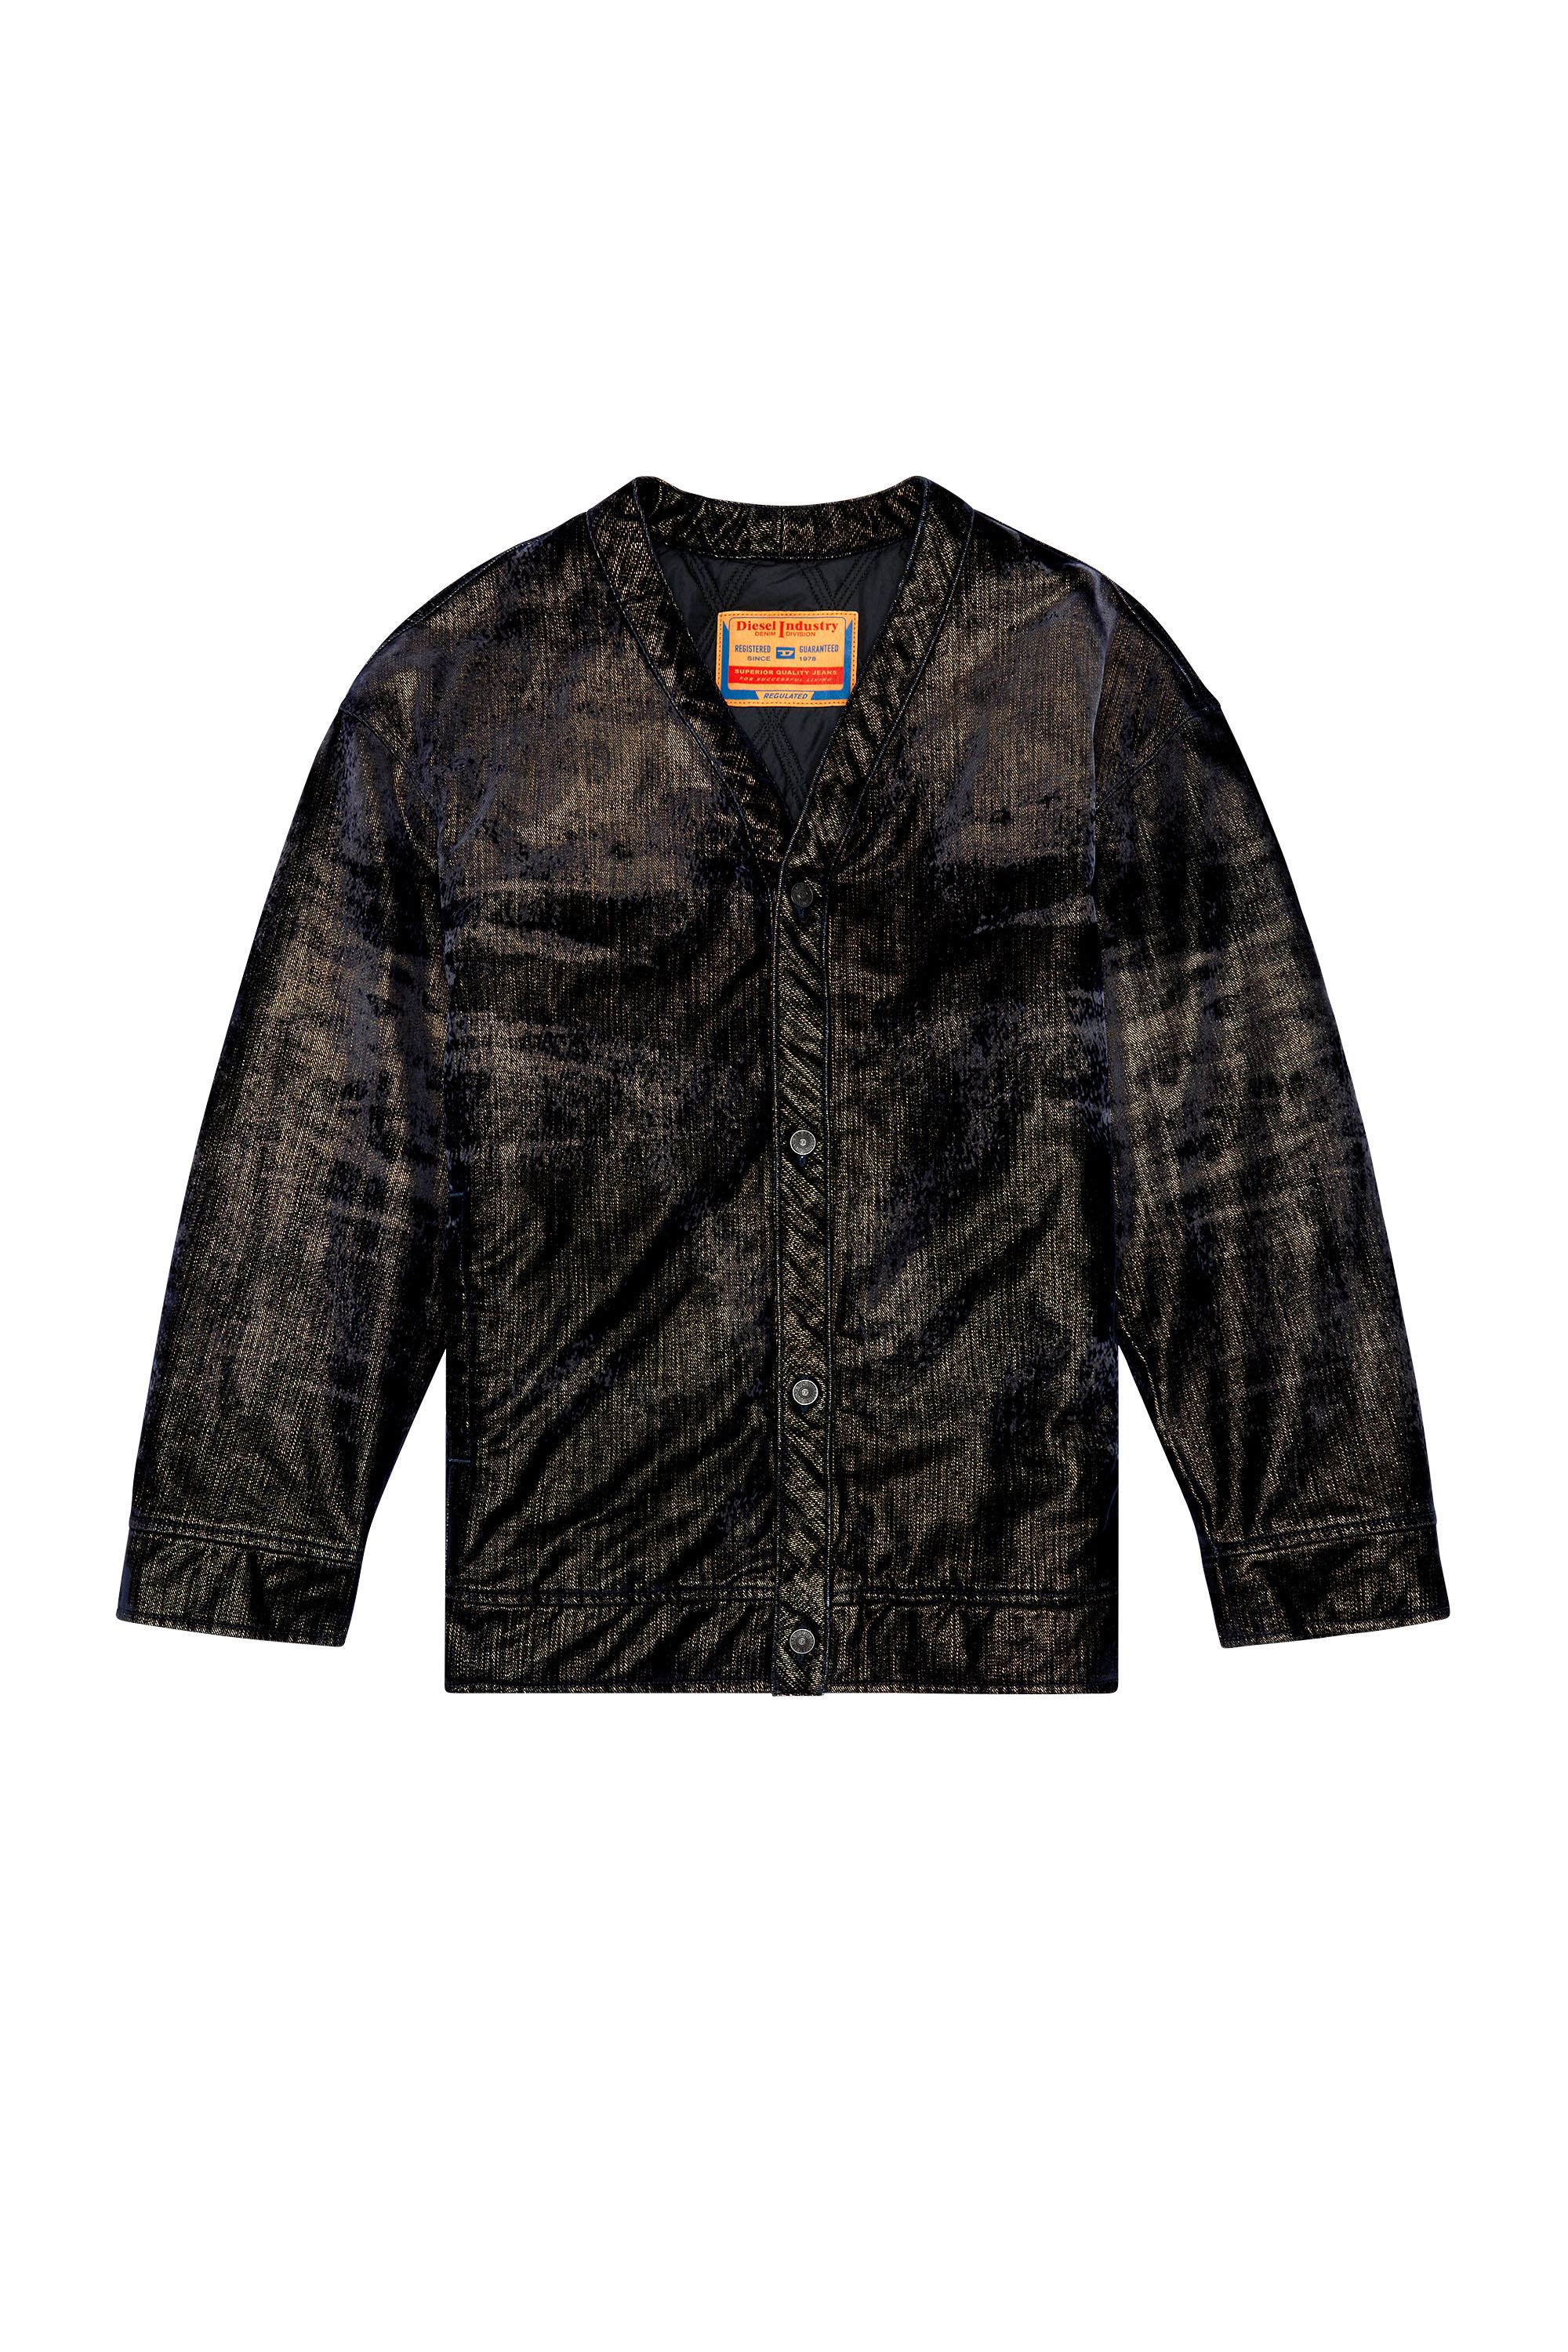 Diesel - D-CONF-S, Man Jacket in shimmery denim in Multicolor - Image 3